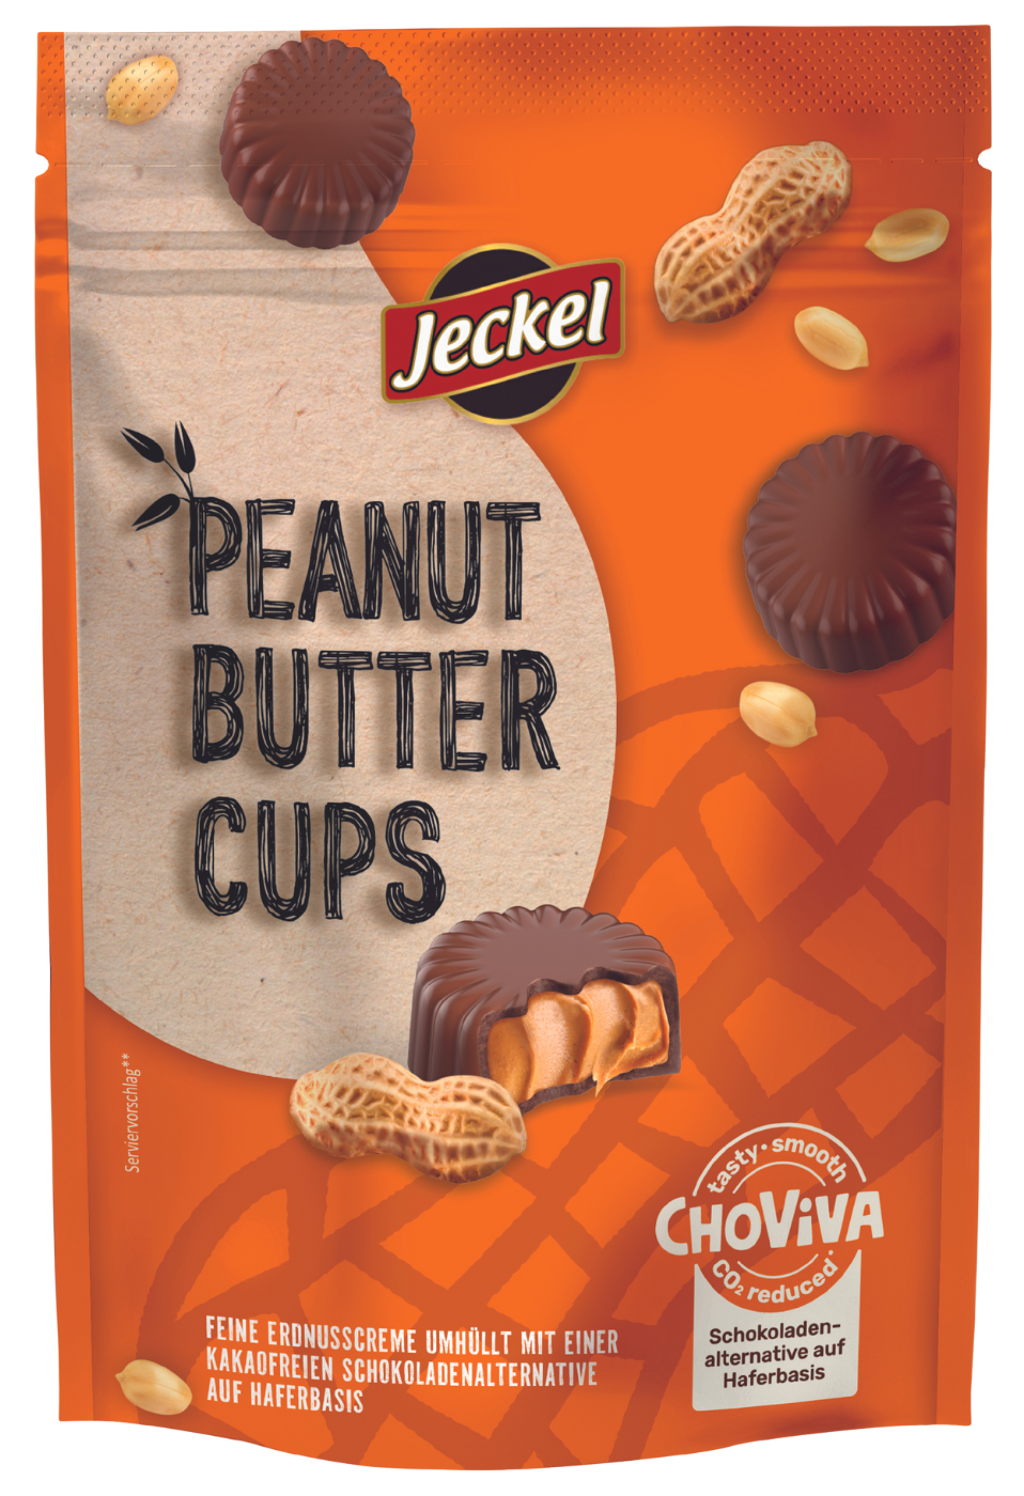 Jeckel Peanut Butter Cups mit ChoViva 